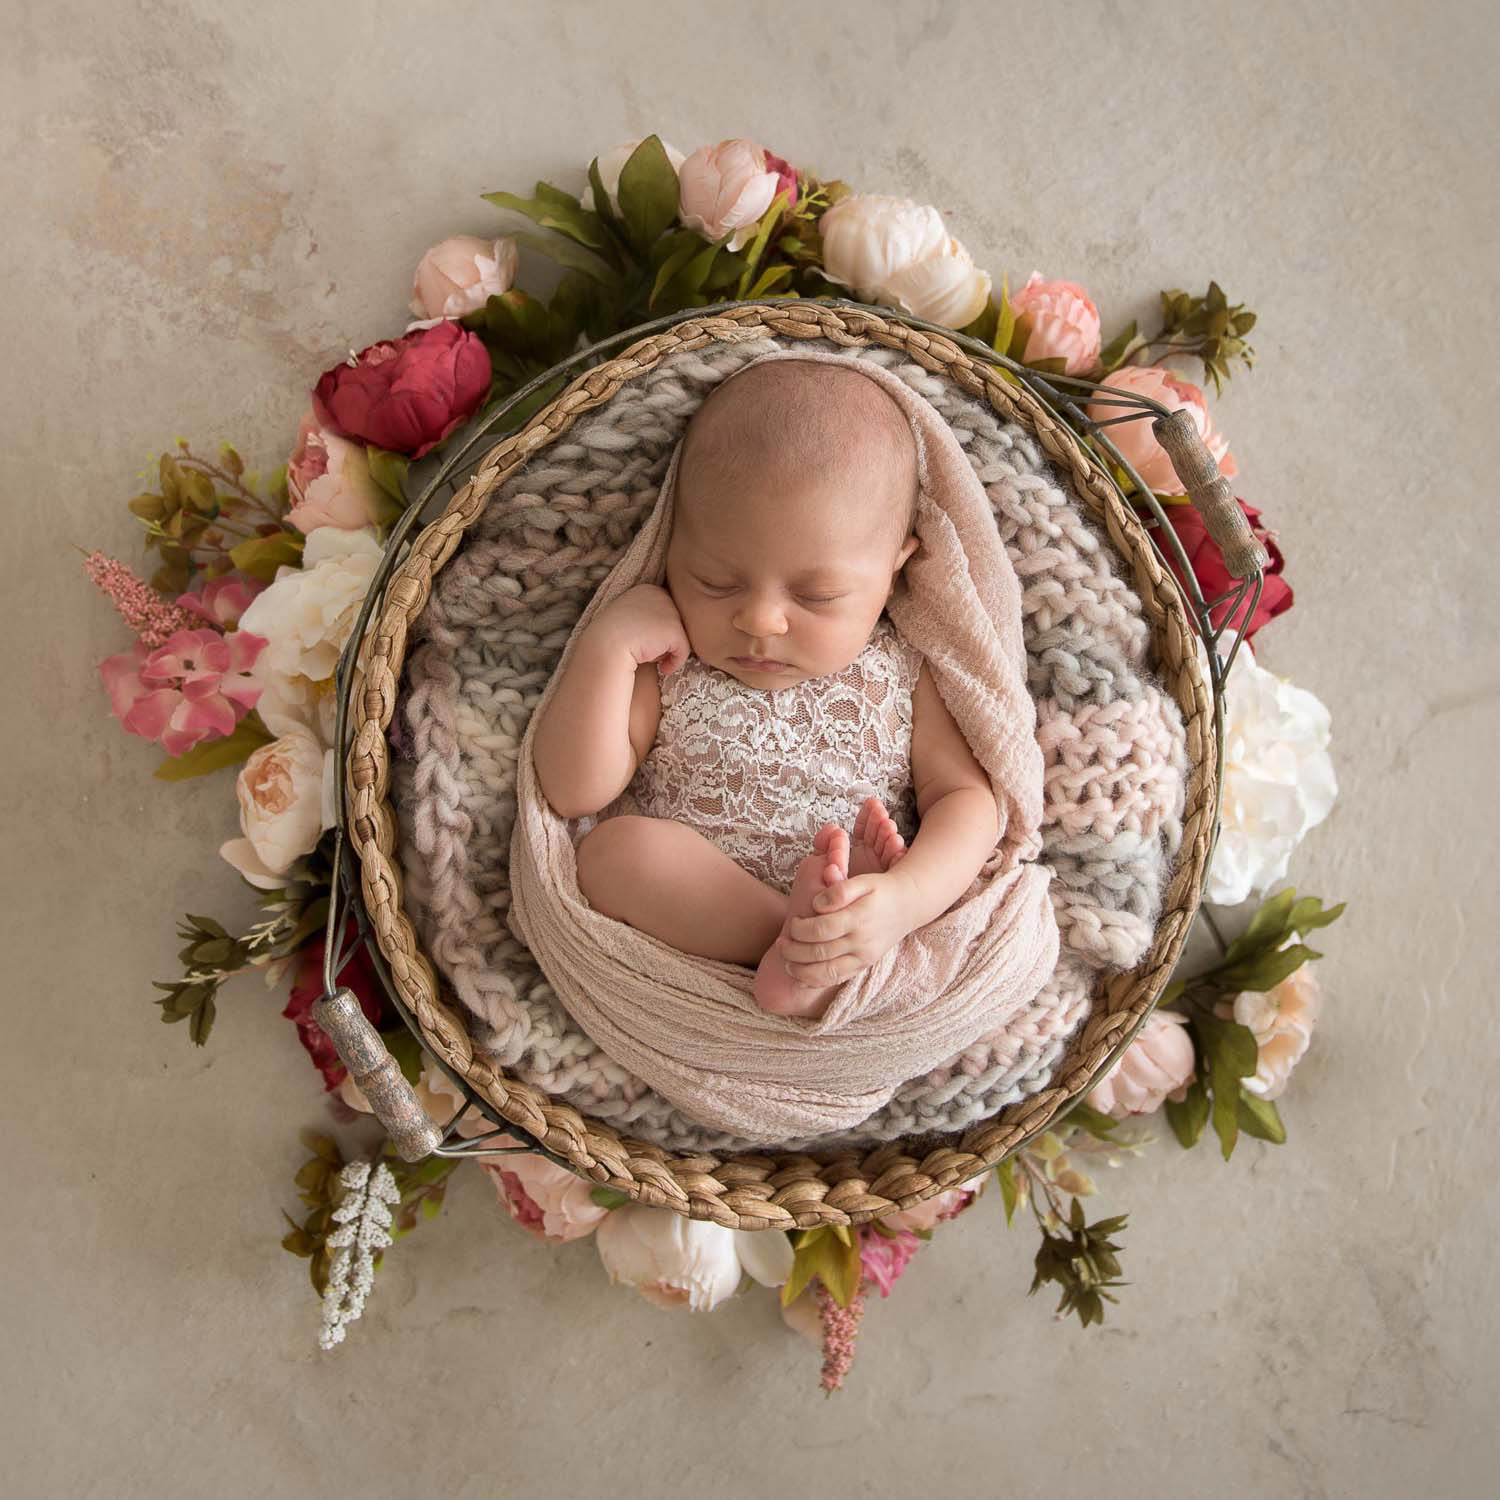 newborn photographby auckland photographer Siobhan Kelly